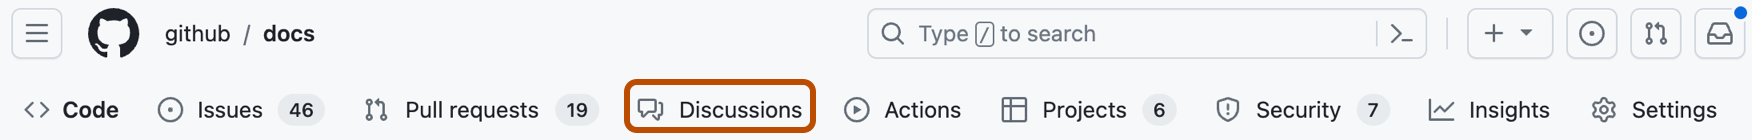 Captura de pantalla de las pestañas de un repositorio de GitHub. La opción "Debates" está resaltada en naranja oscuro.